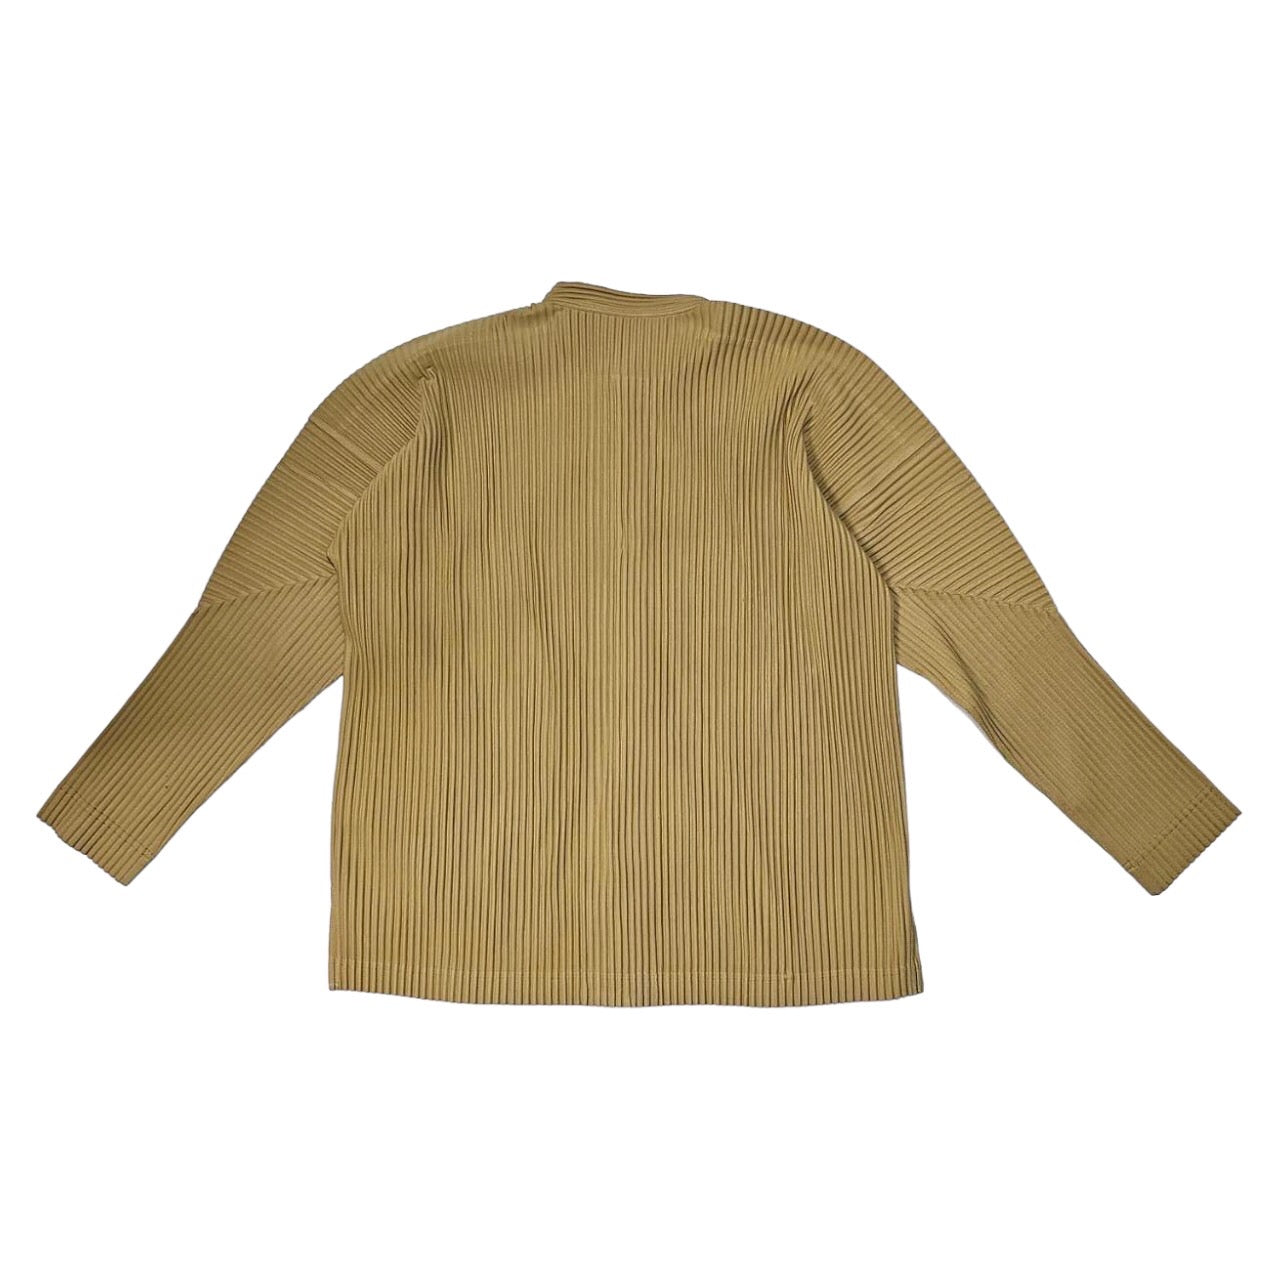 HOMME PLISSE ISSEY MIYAKE(オムプリッセイッセイミヤケ) mao color pleated shirt  jacket/マオカラープリーツシャツジャケット HP73JJ112 SIZE 3(L) ライトブラウン